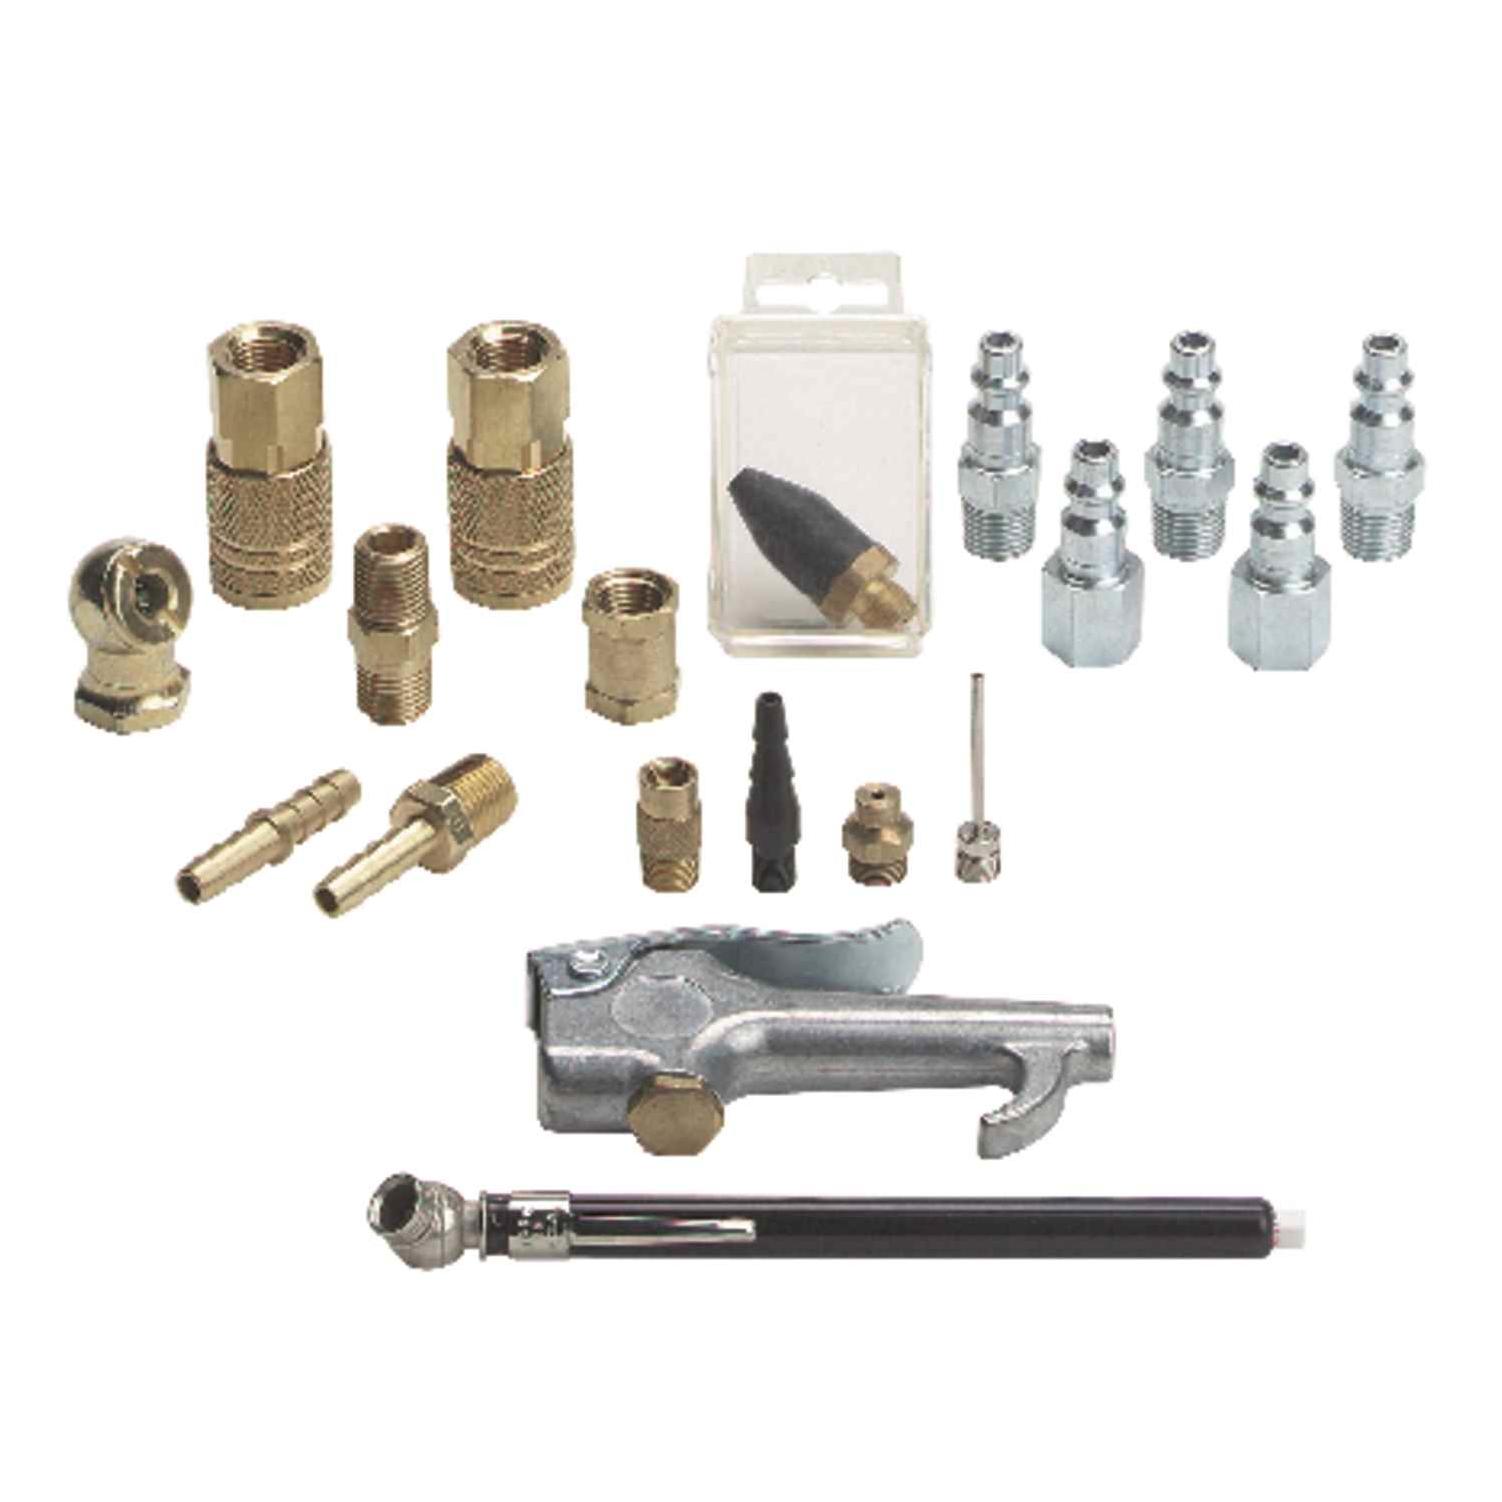 1/4" NPT Extender Pipe Fitting 1-9/16" Long Solid Brass Pressure Gauge Adapter 